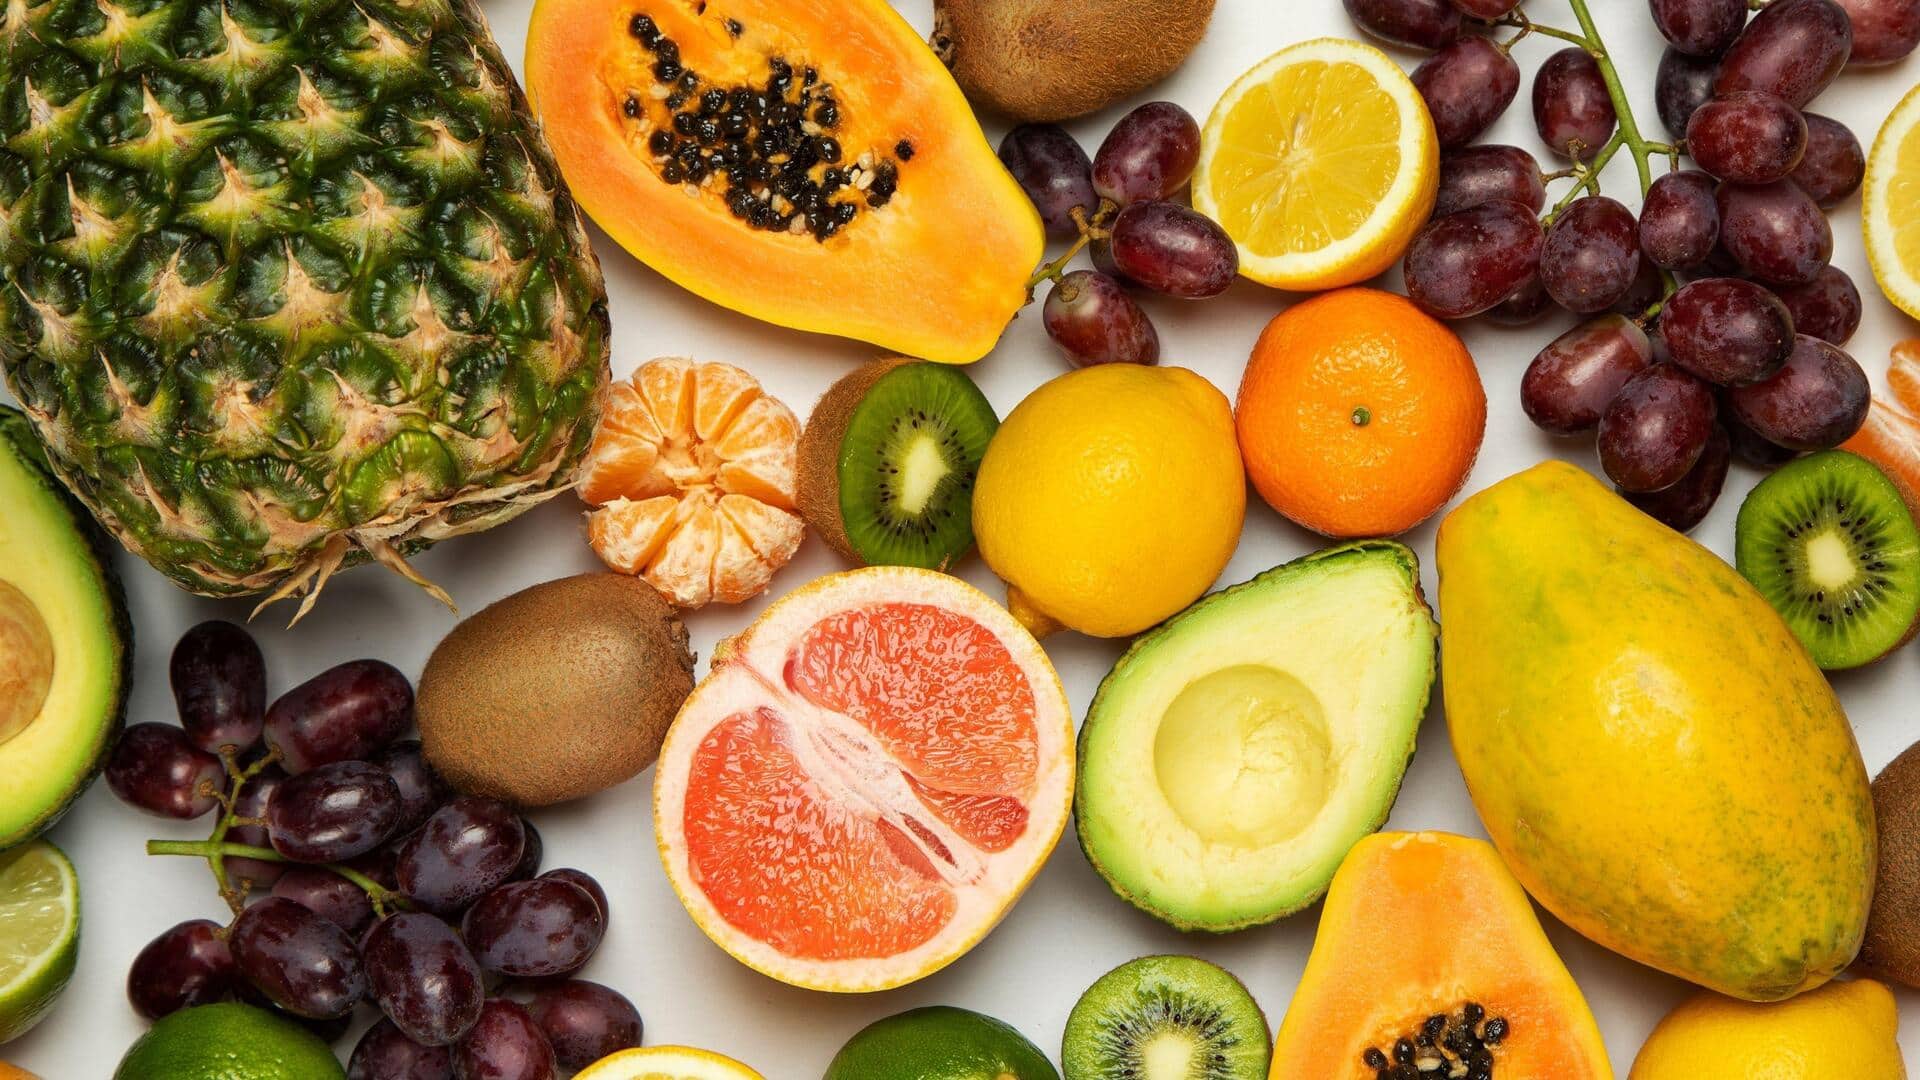 Best Fruits for Diabetes: డయాబెటిస్‌ ఉన్నవారు తినాల్సిన పండ్లు ఇవే 